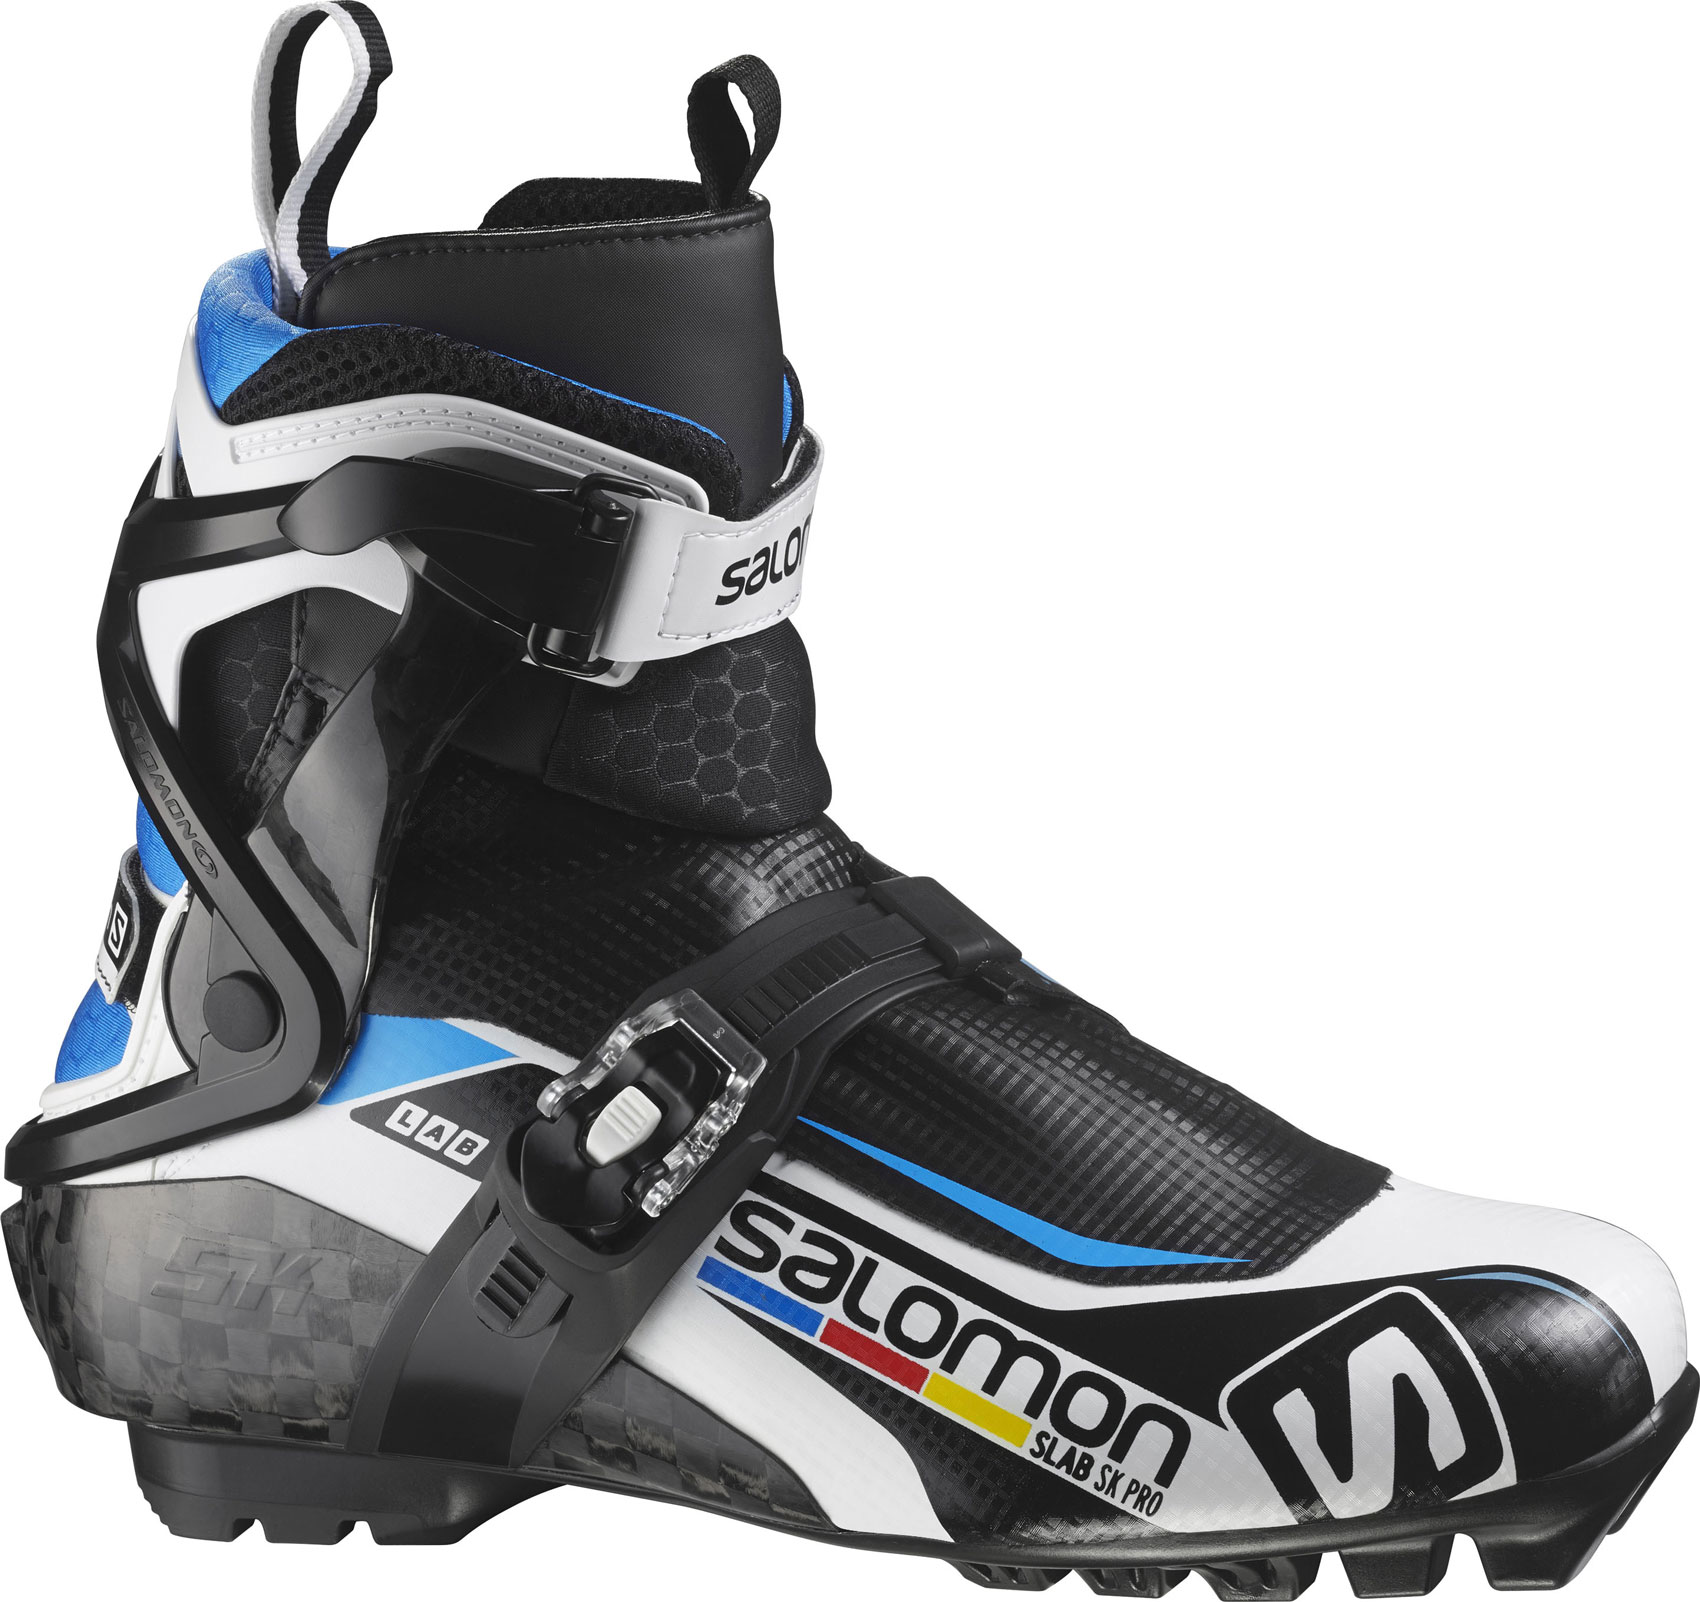 Men’s nordic ski boots